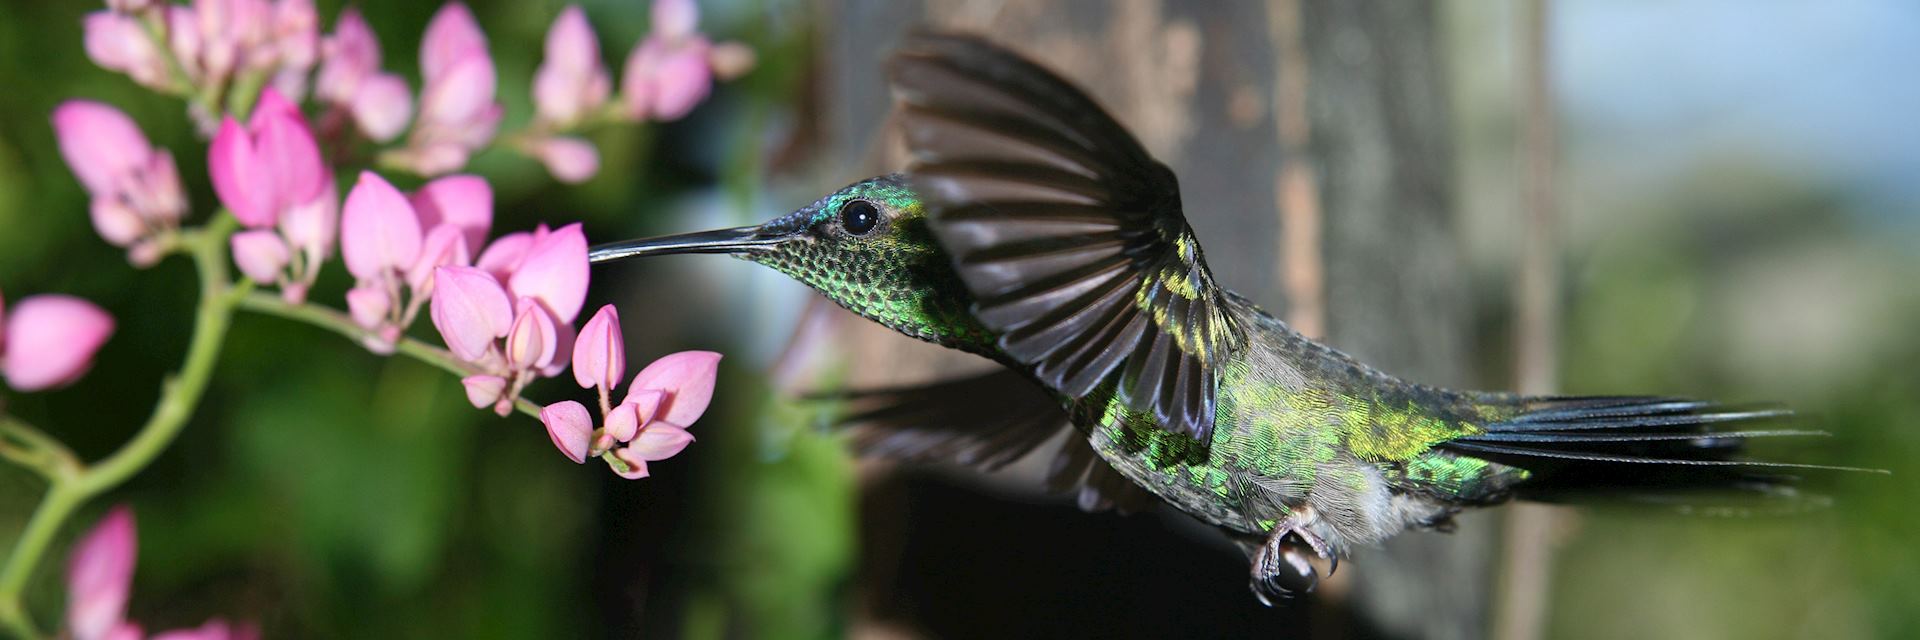 Hummingbird in Paraguay